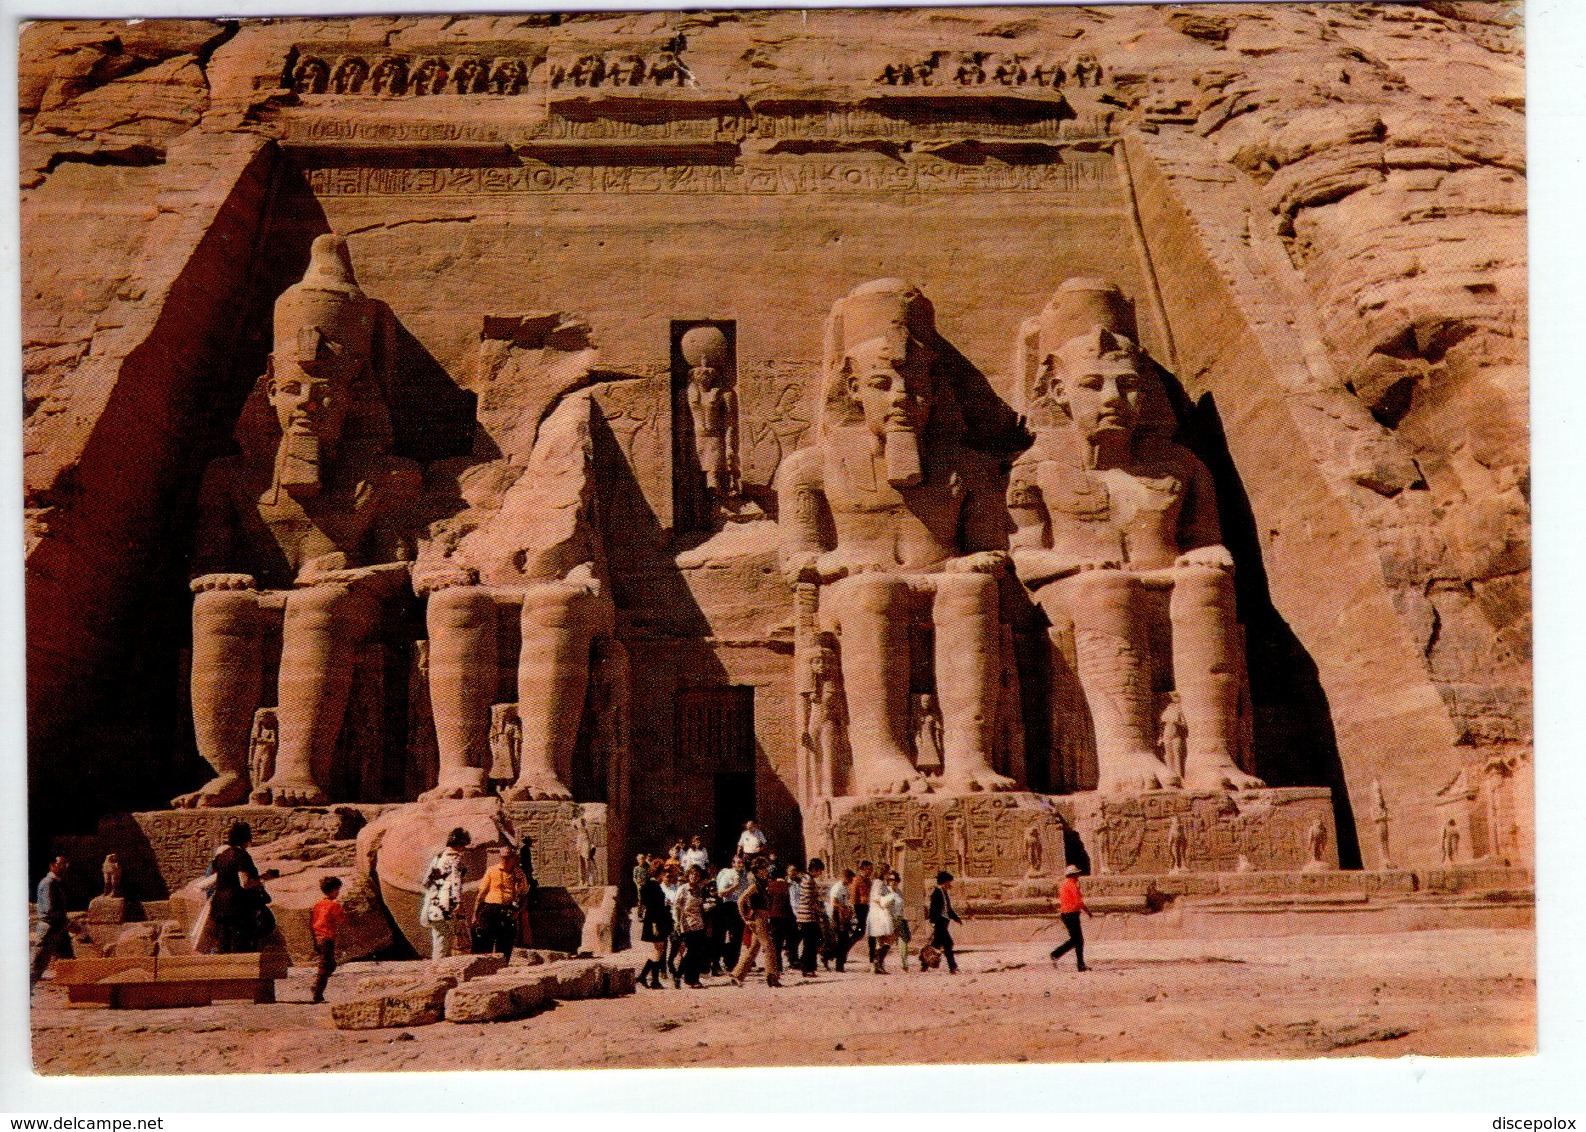 U3878 Nice Stamp 1986 On Postcard EGYPT, THE TEMPLE OF ABU SEMBEL - BOLLO O FRANCOBOLLO STORIA POSTALE - Abu Simbel